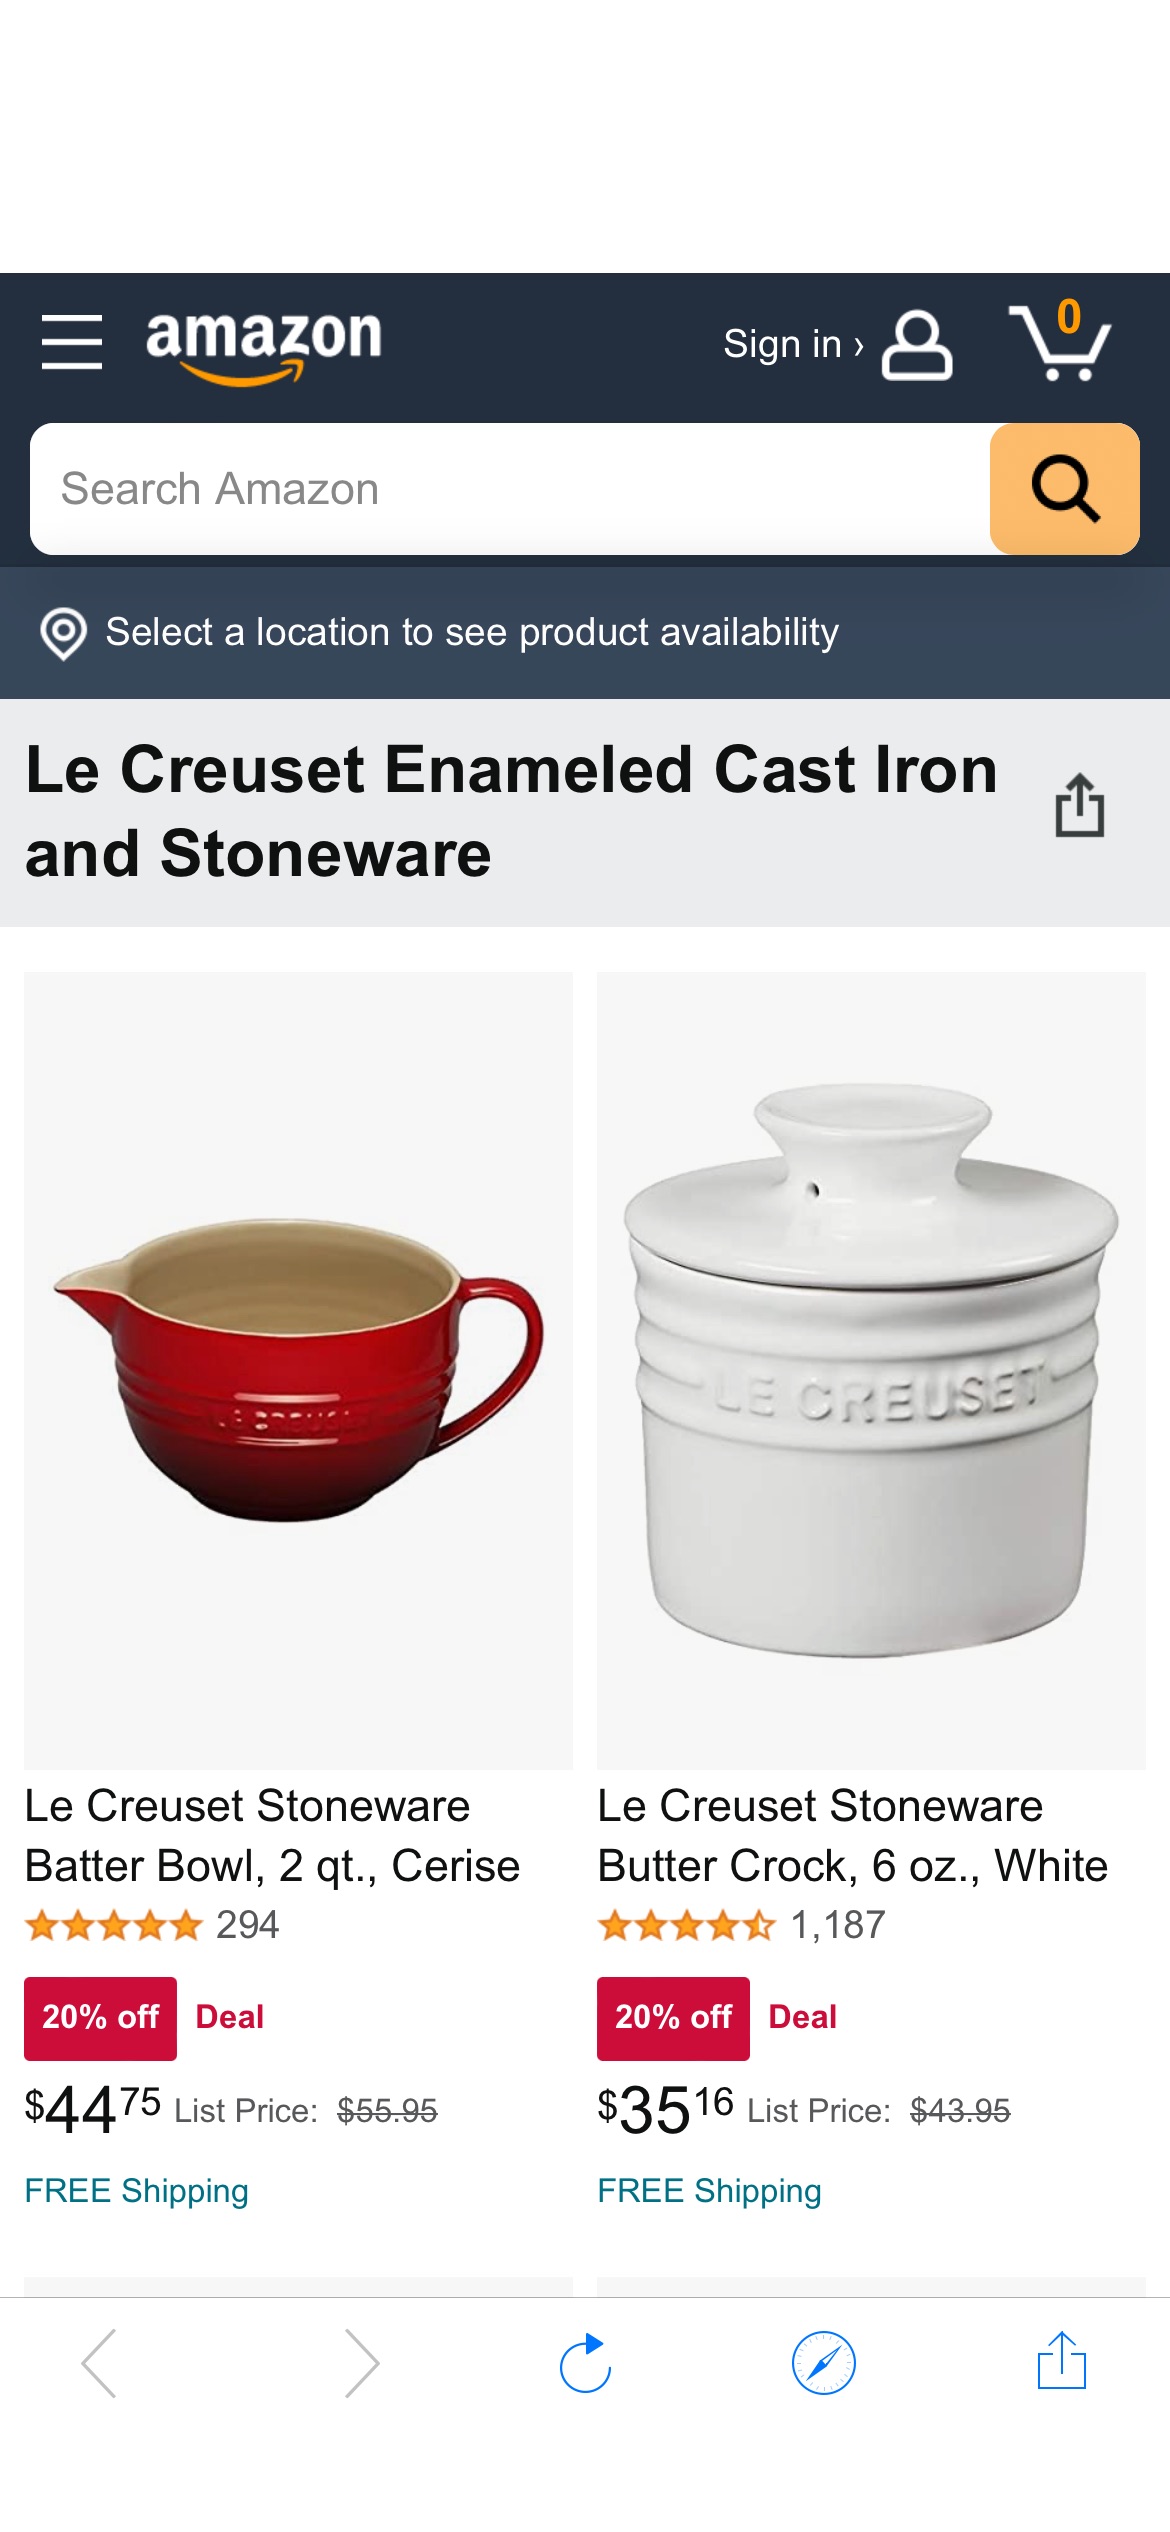 Le Creuset Enameled Cast Iron and Stoneware